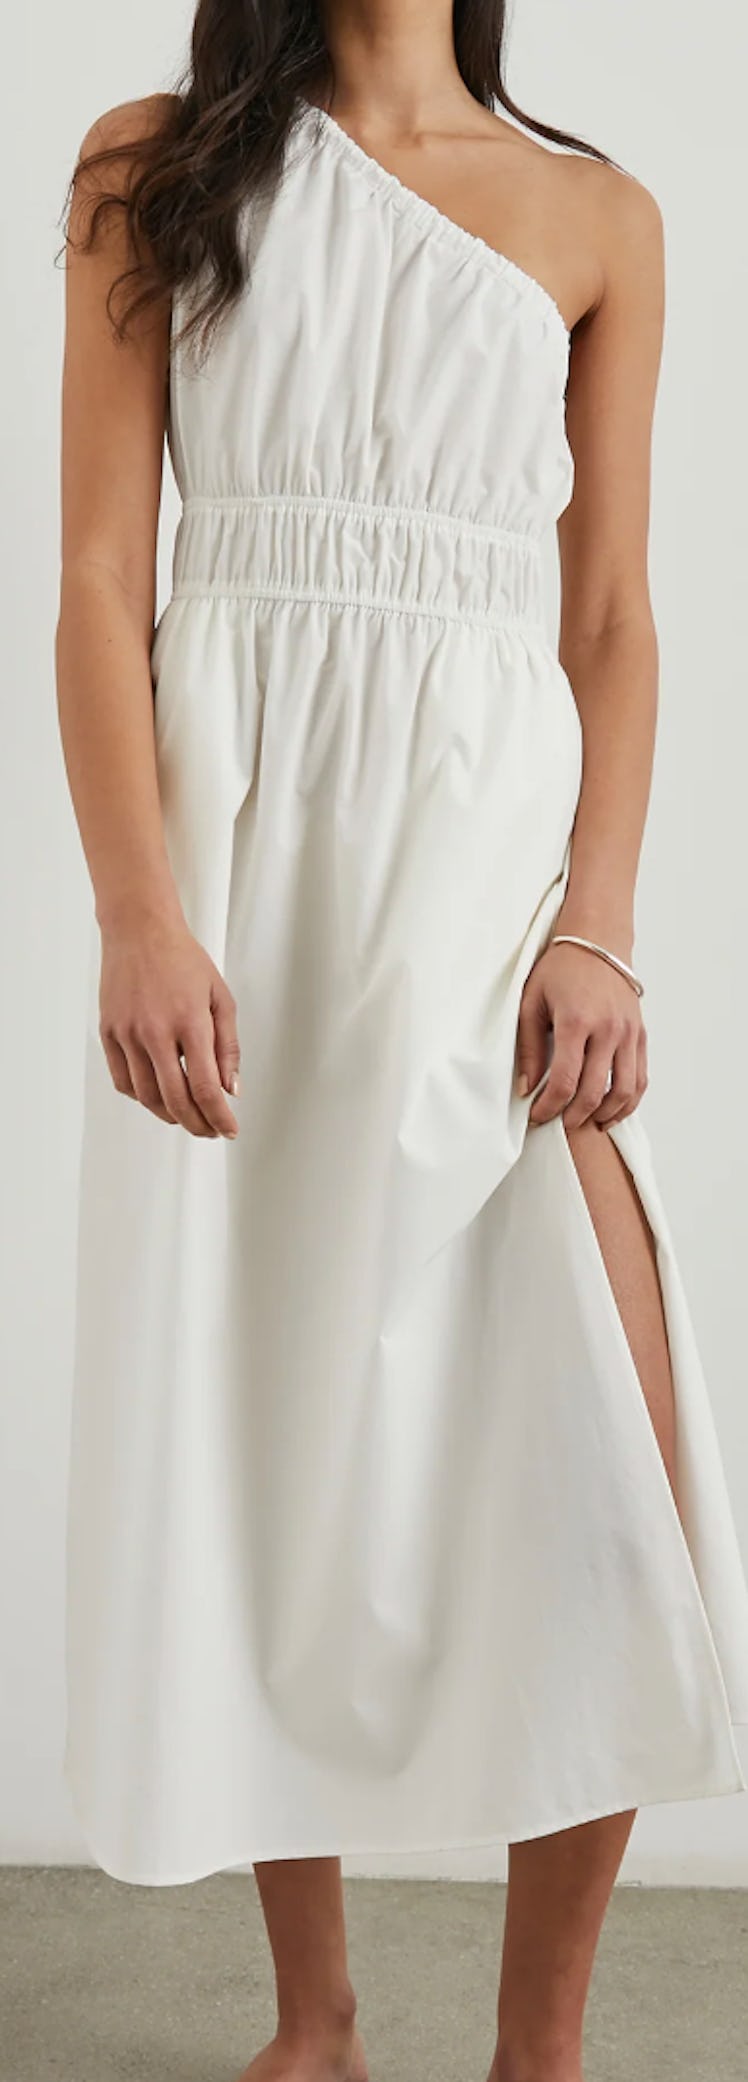 vestido de lino blanco